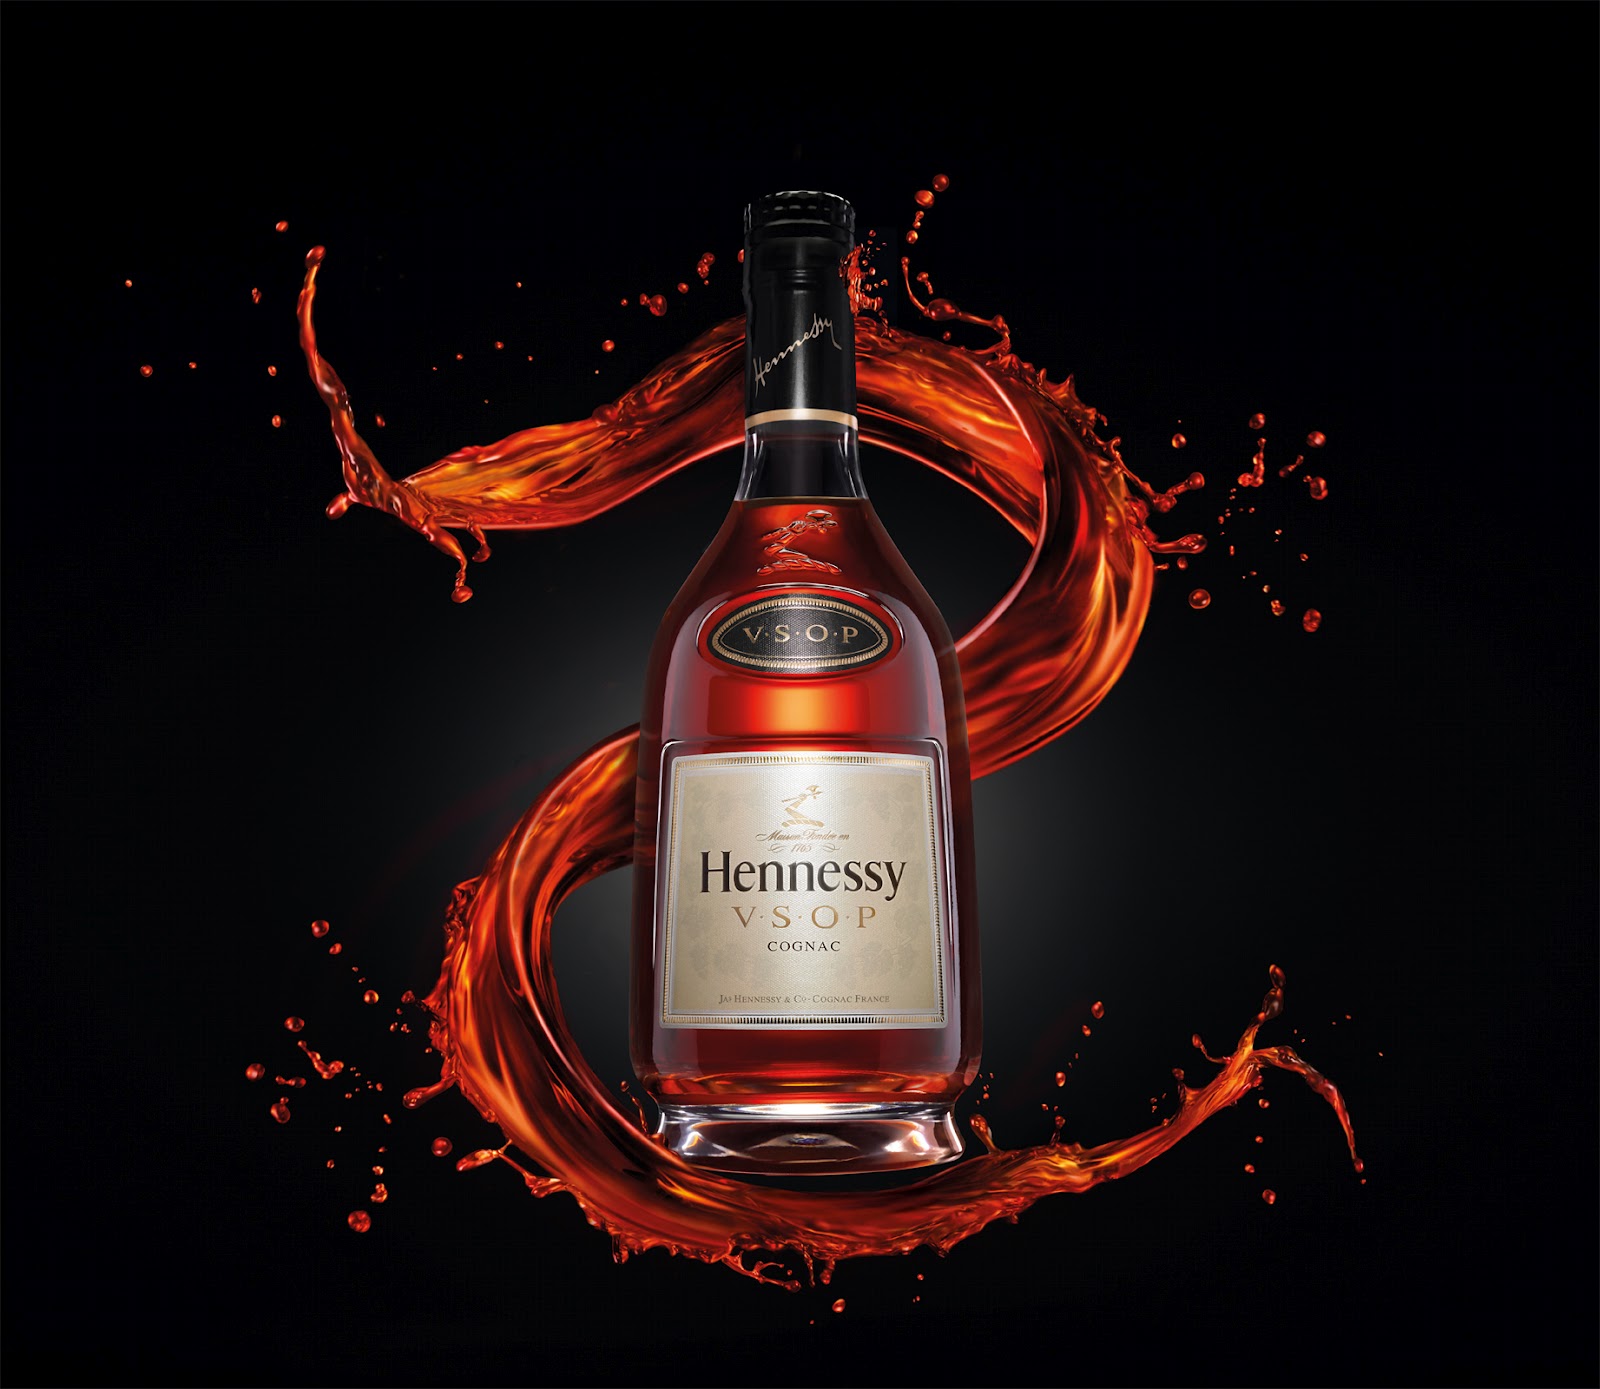 Hennessy Vsop Cognac Wallpaper HD Background Gallery